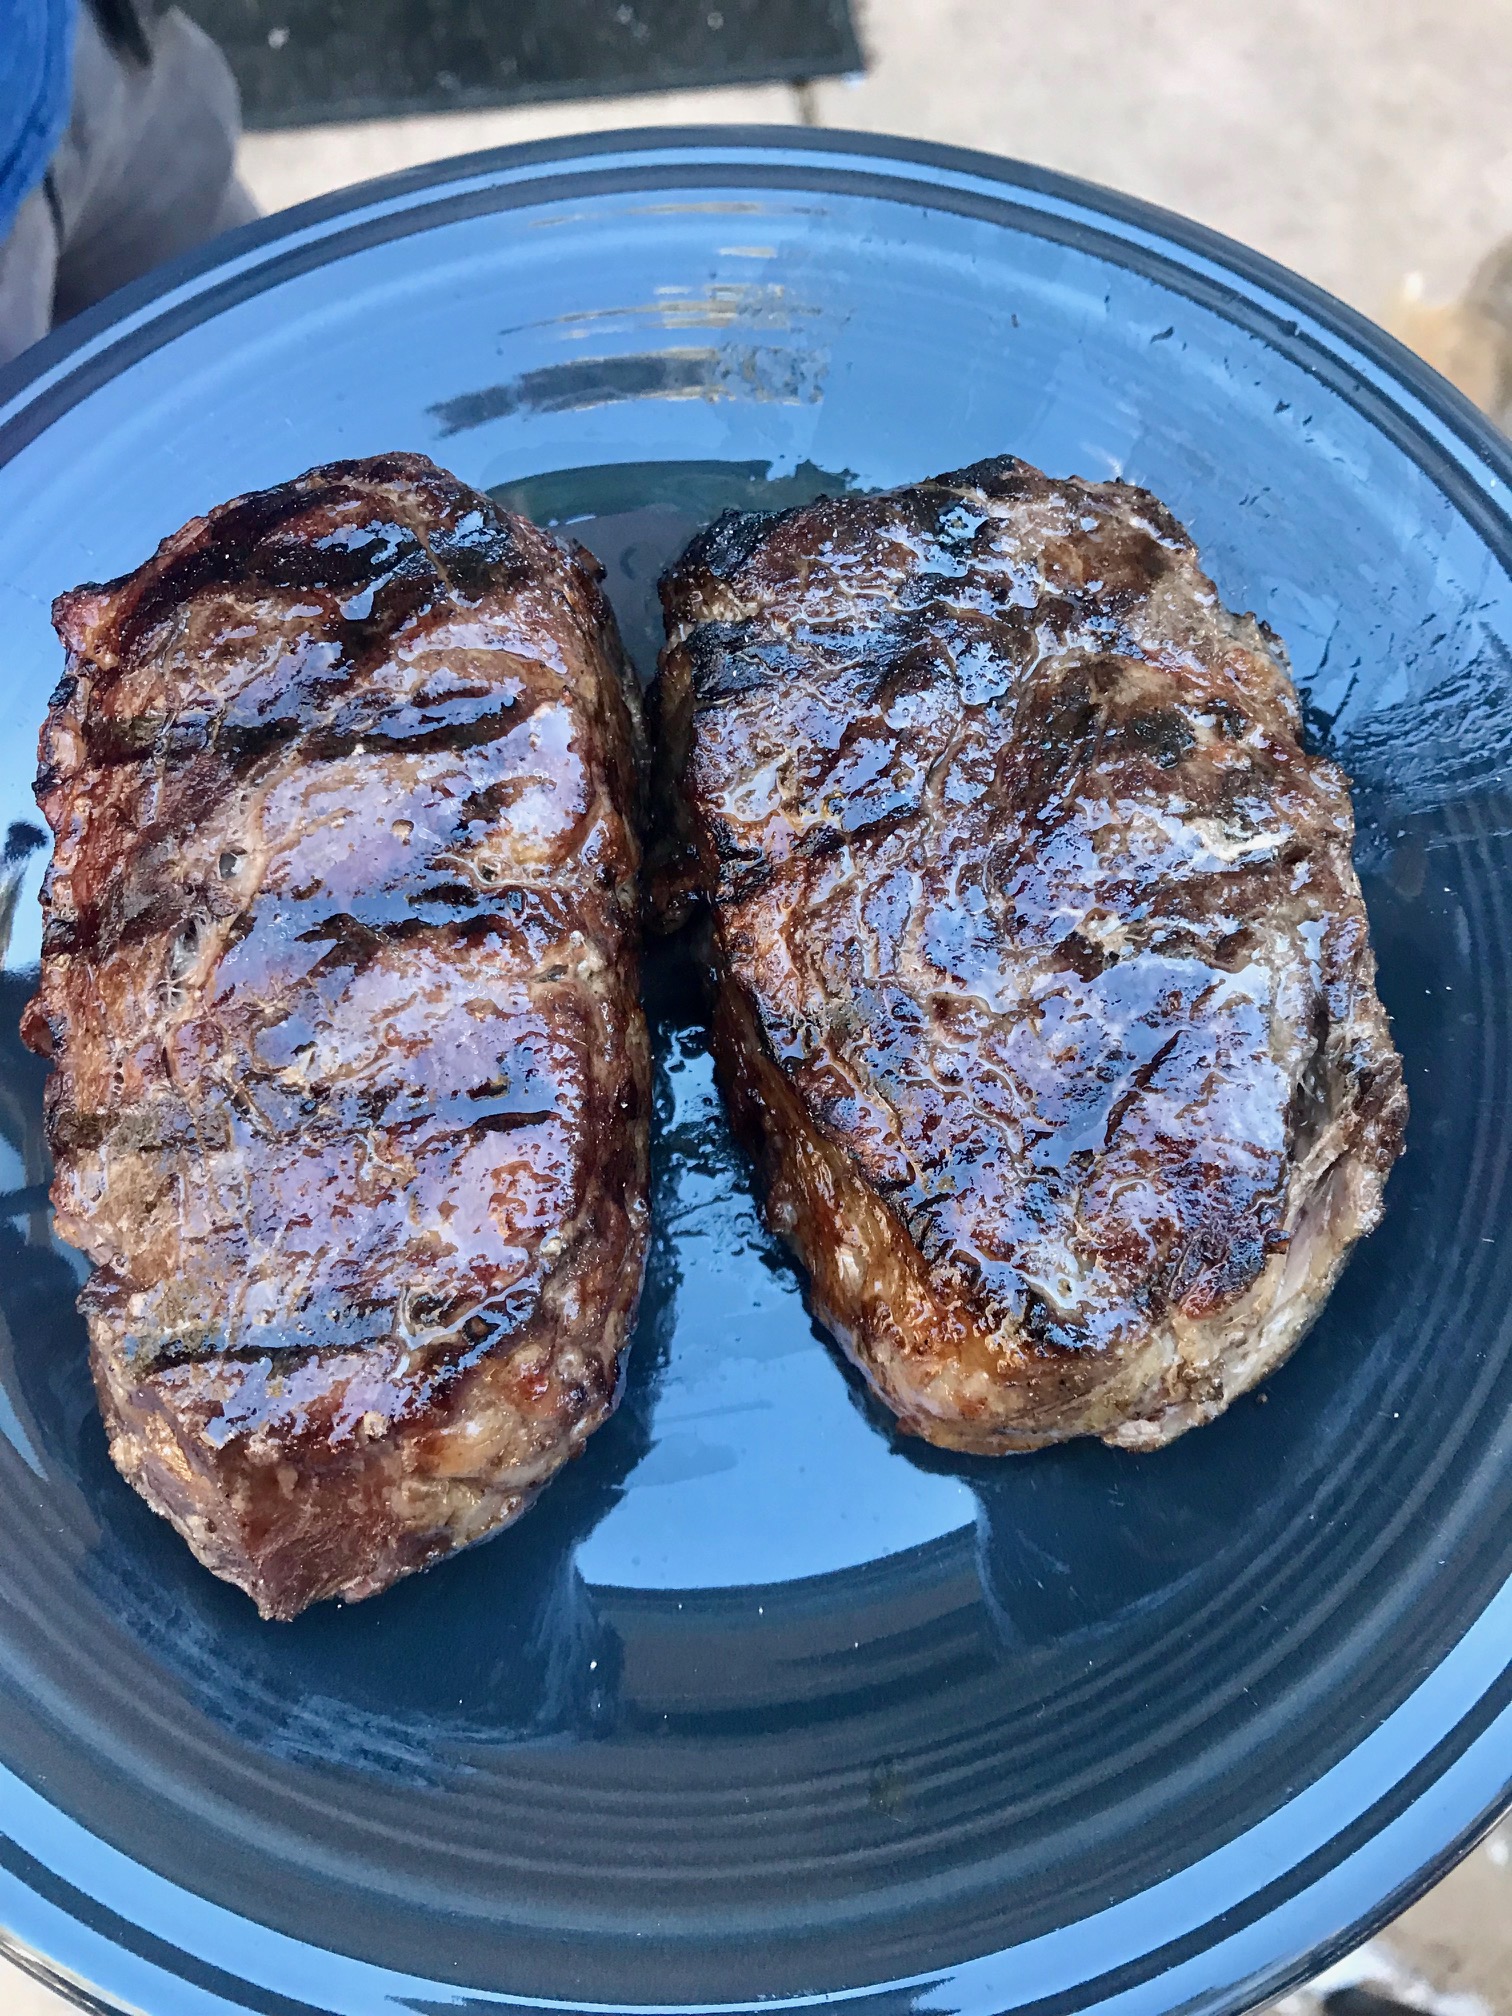 Afterburner Chimney Seared Steak — A Screaming Hot Searing Method